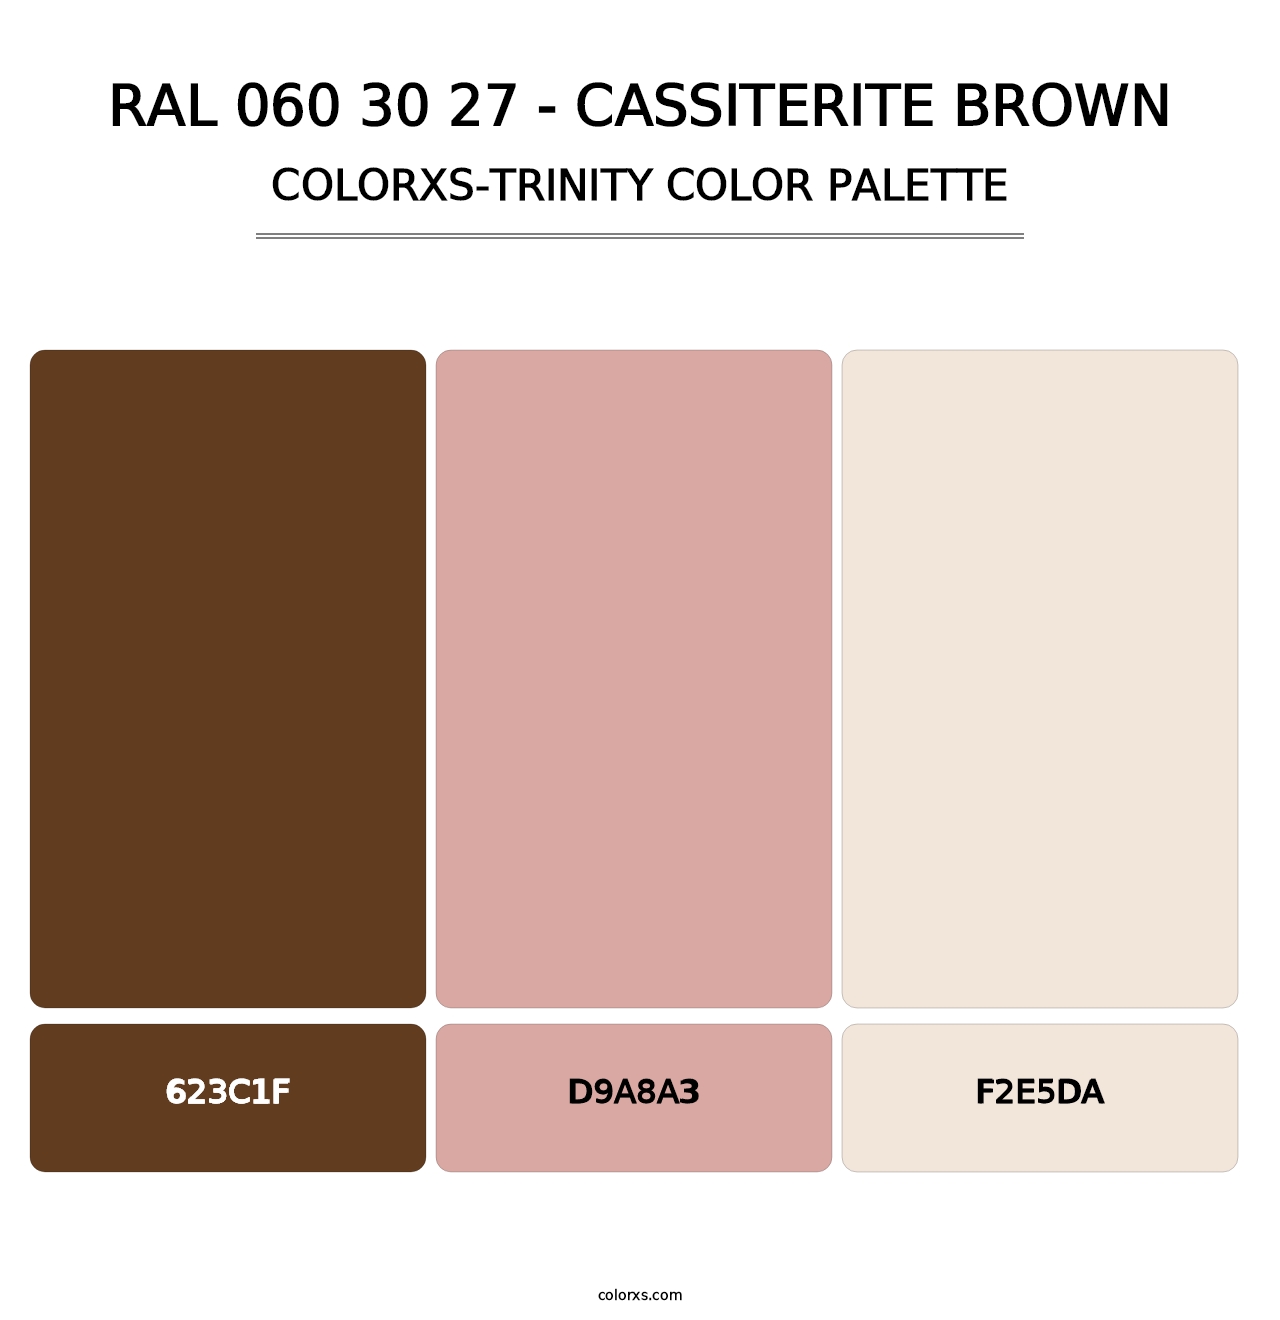 RAL 060 30 27 - Cassiterite Brown - Colorxs Trinity Palette